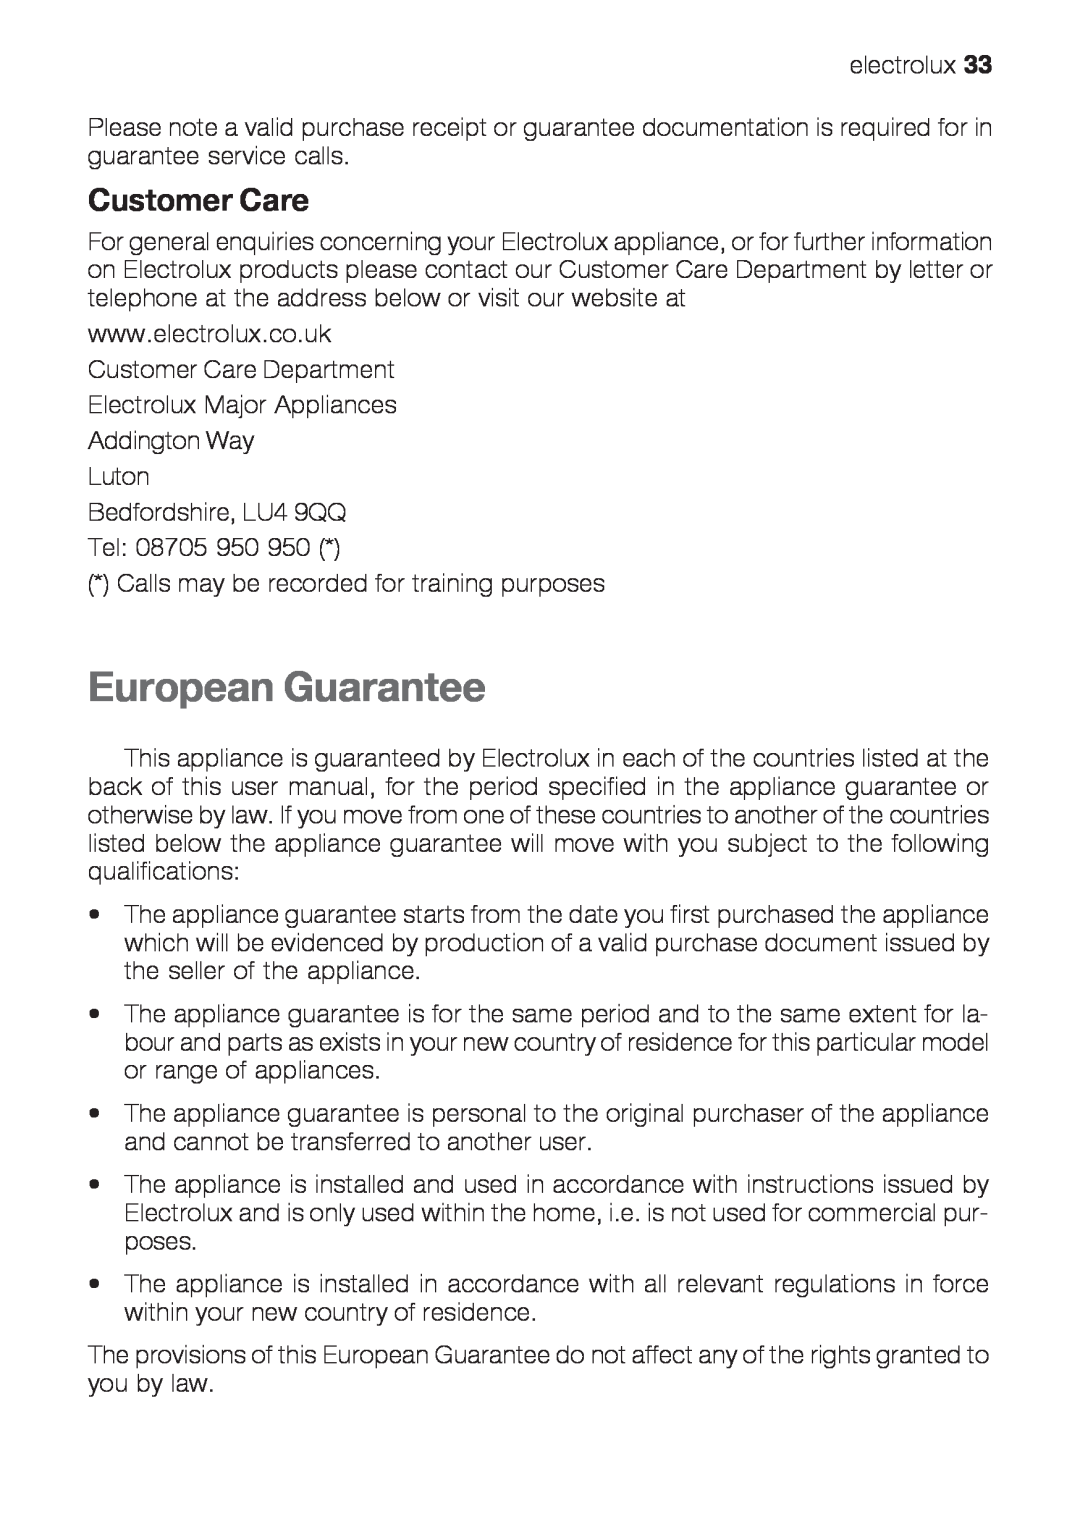 Electrolux EOG 10000 user manual European Guarantee, Customer Care 